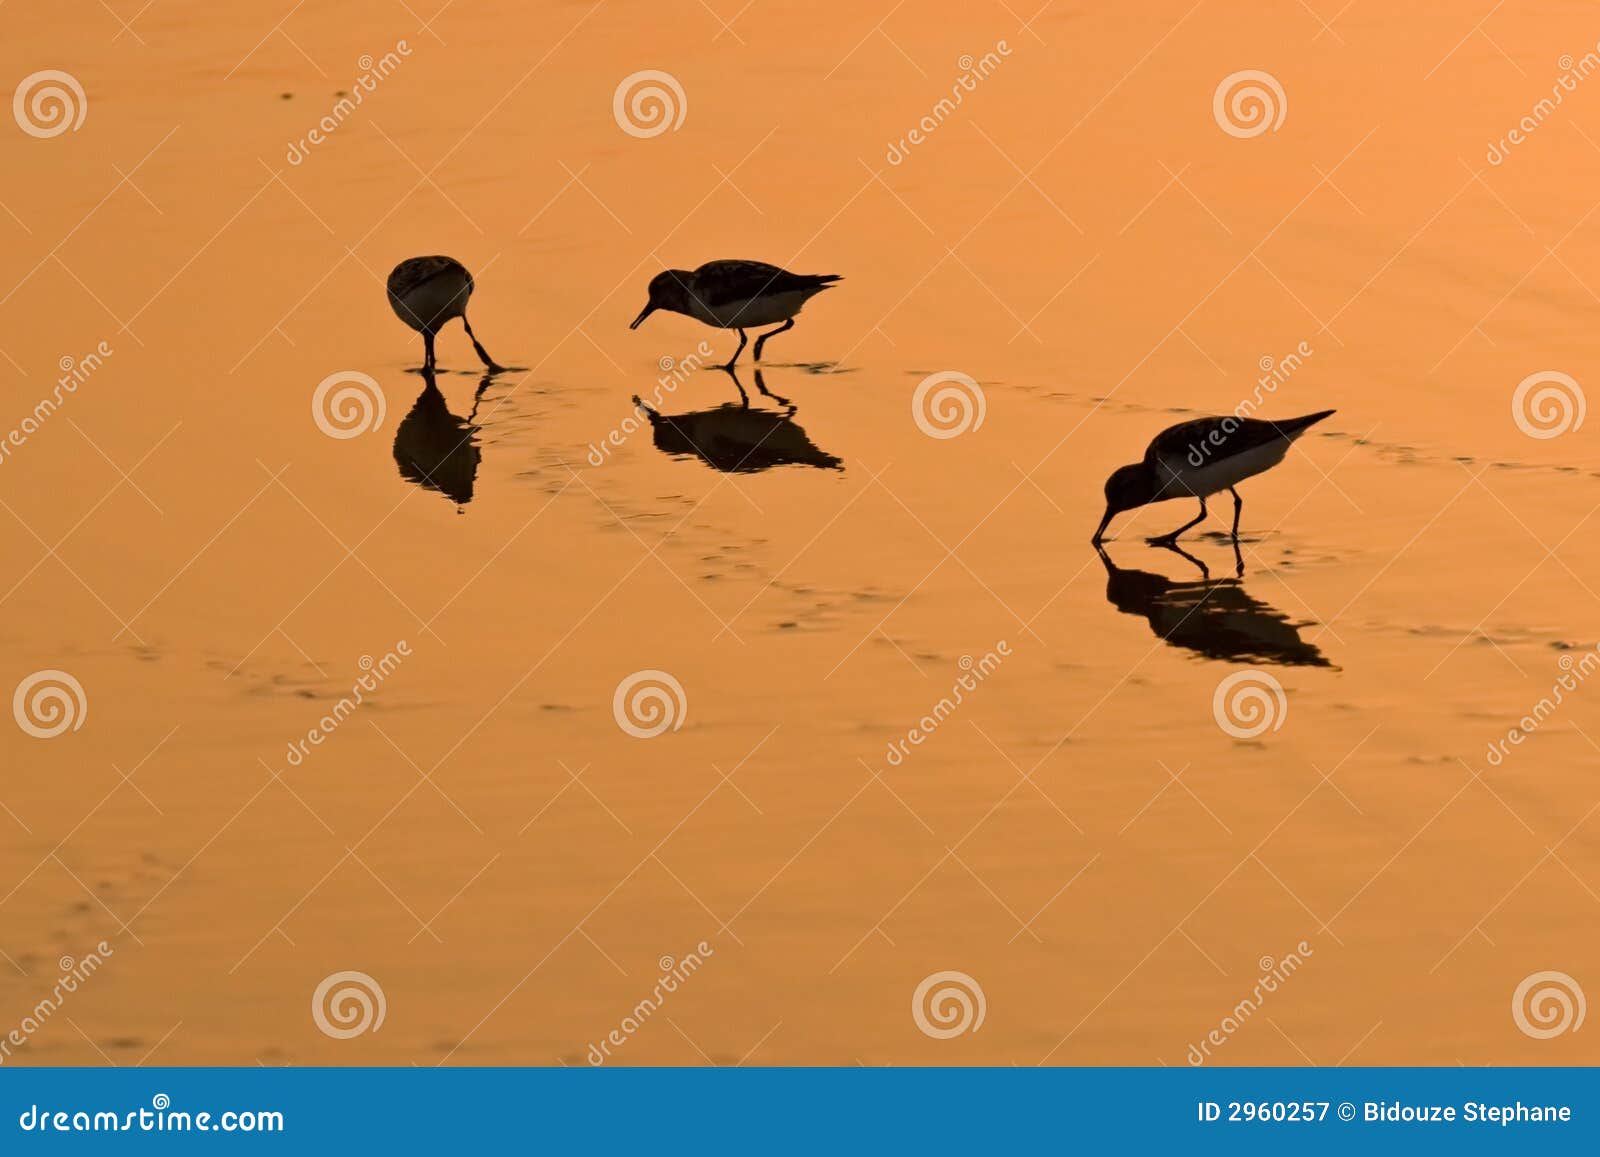 wading birds on golden sand